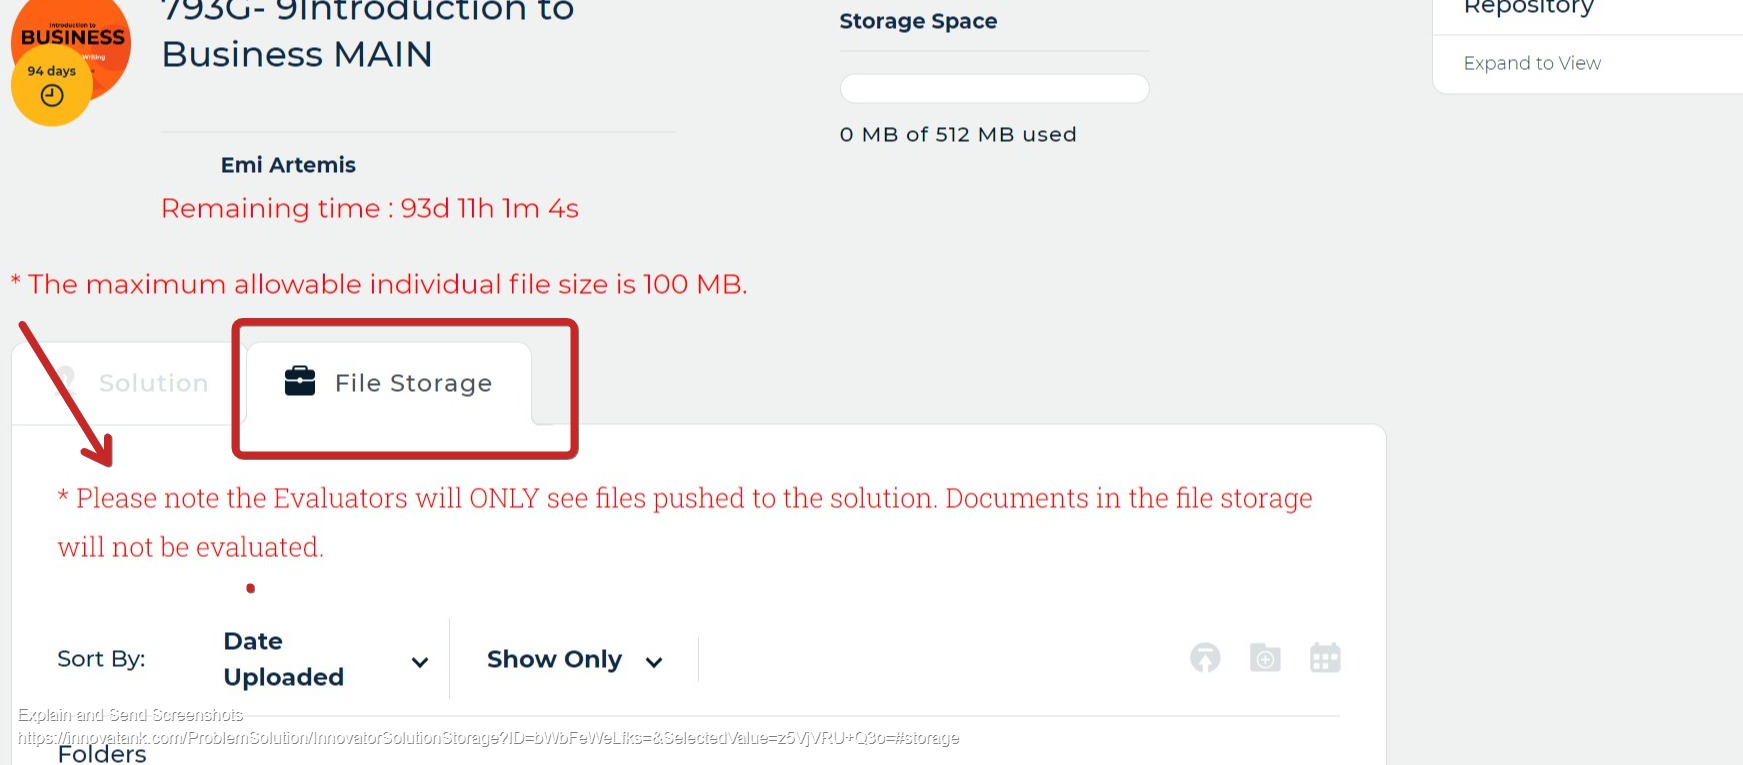 Solution-File Storage